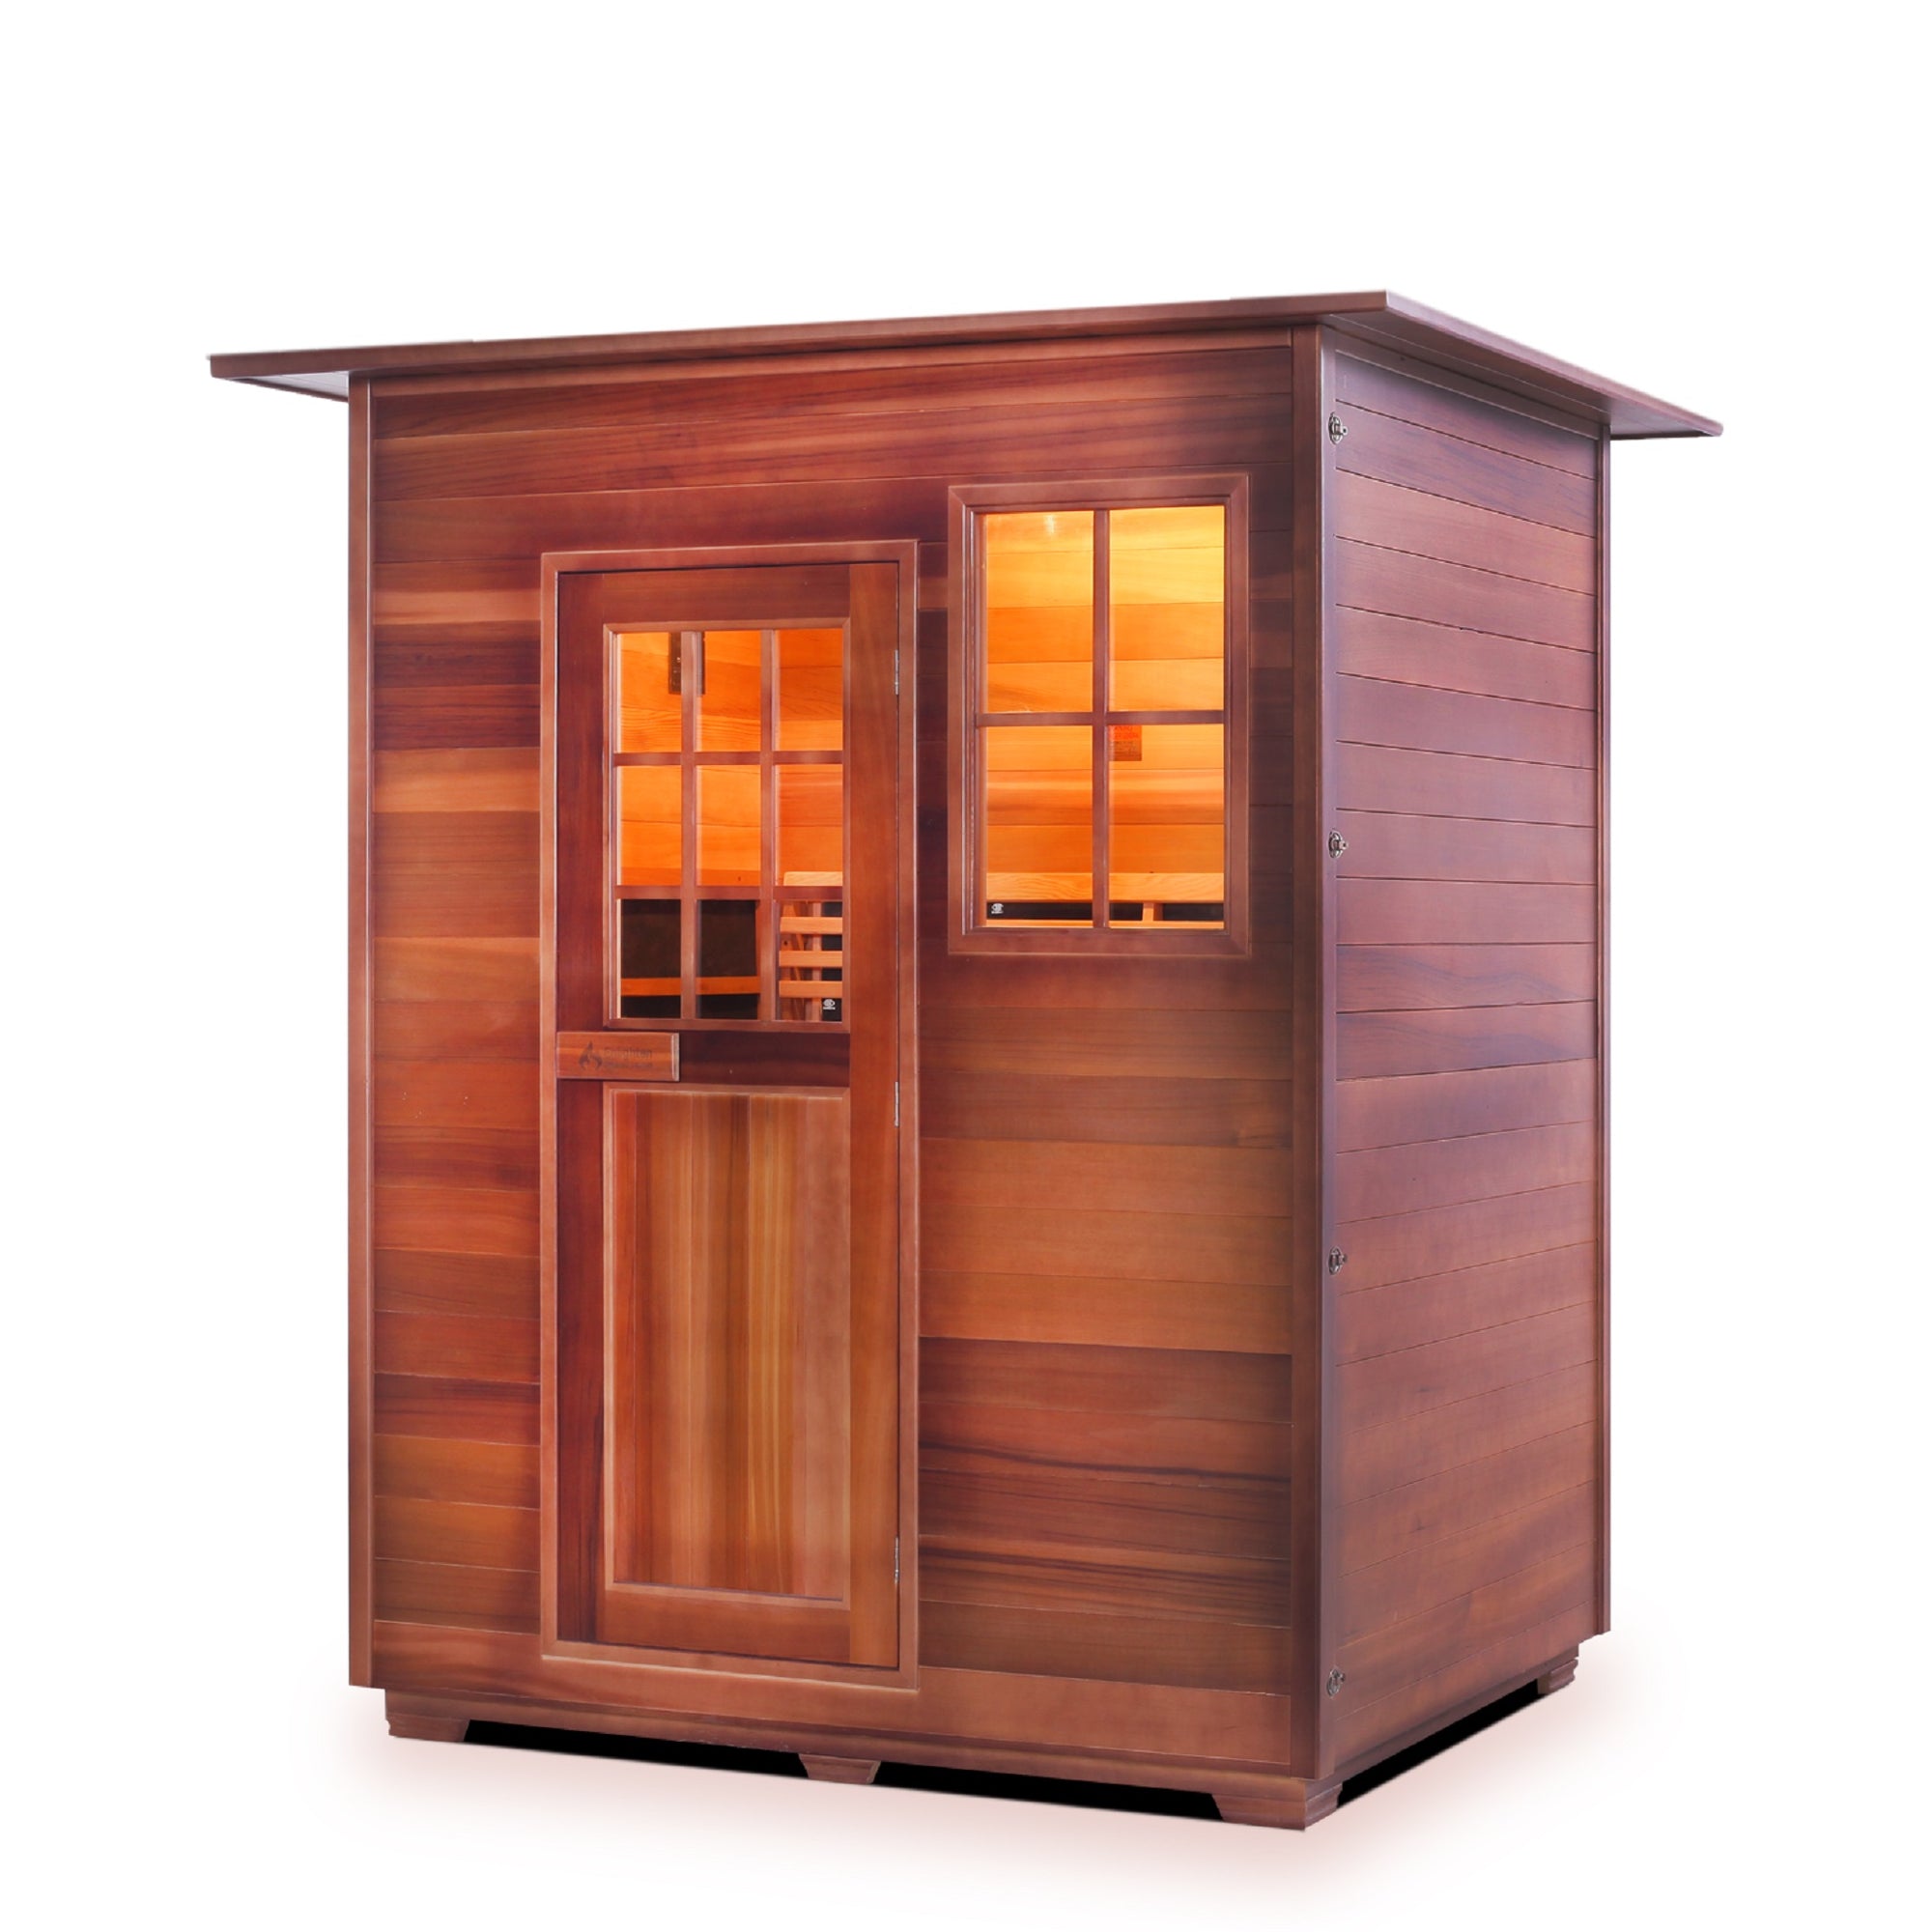 Enlighten Sauna InfraNature Original Infrared Canadian Cedar Wood with indoor Roofed three person sauna front view